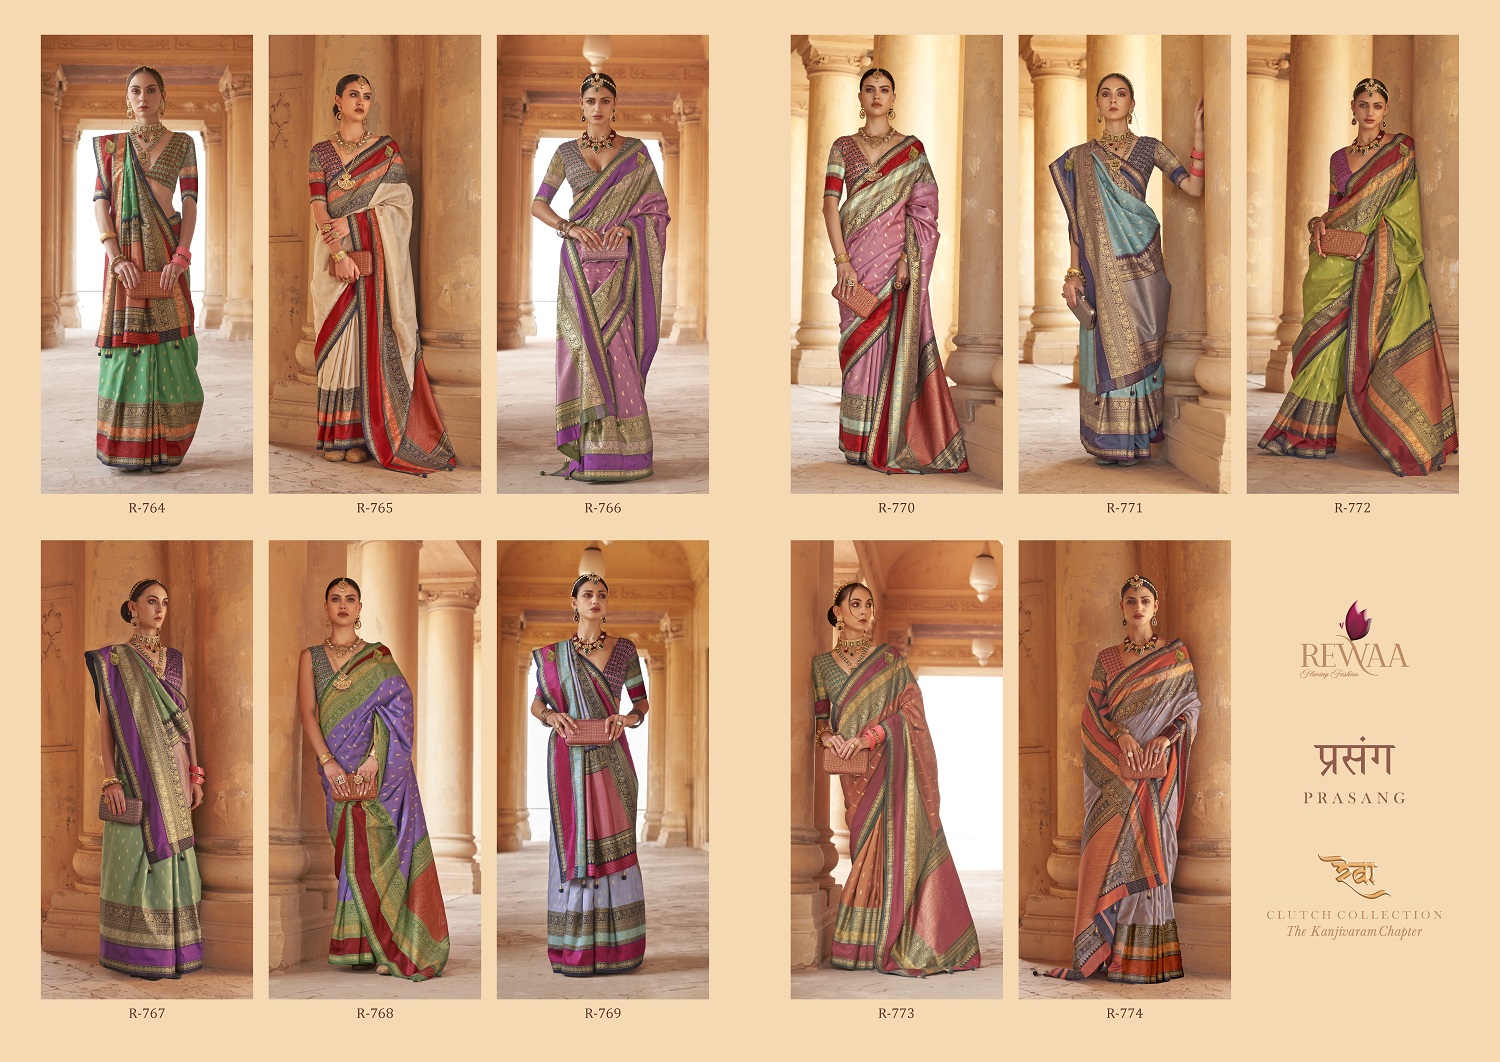 Rewaa Prasang collection 11